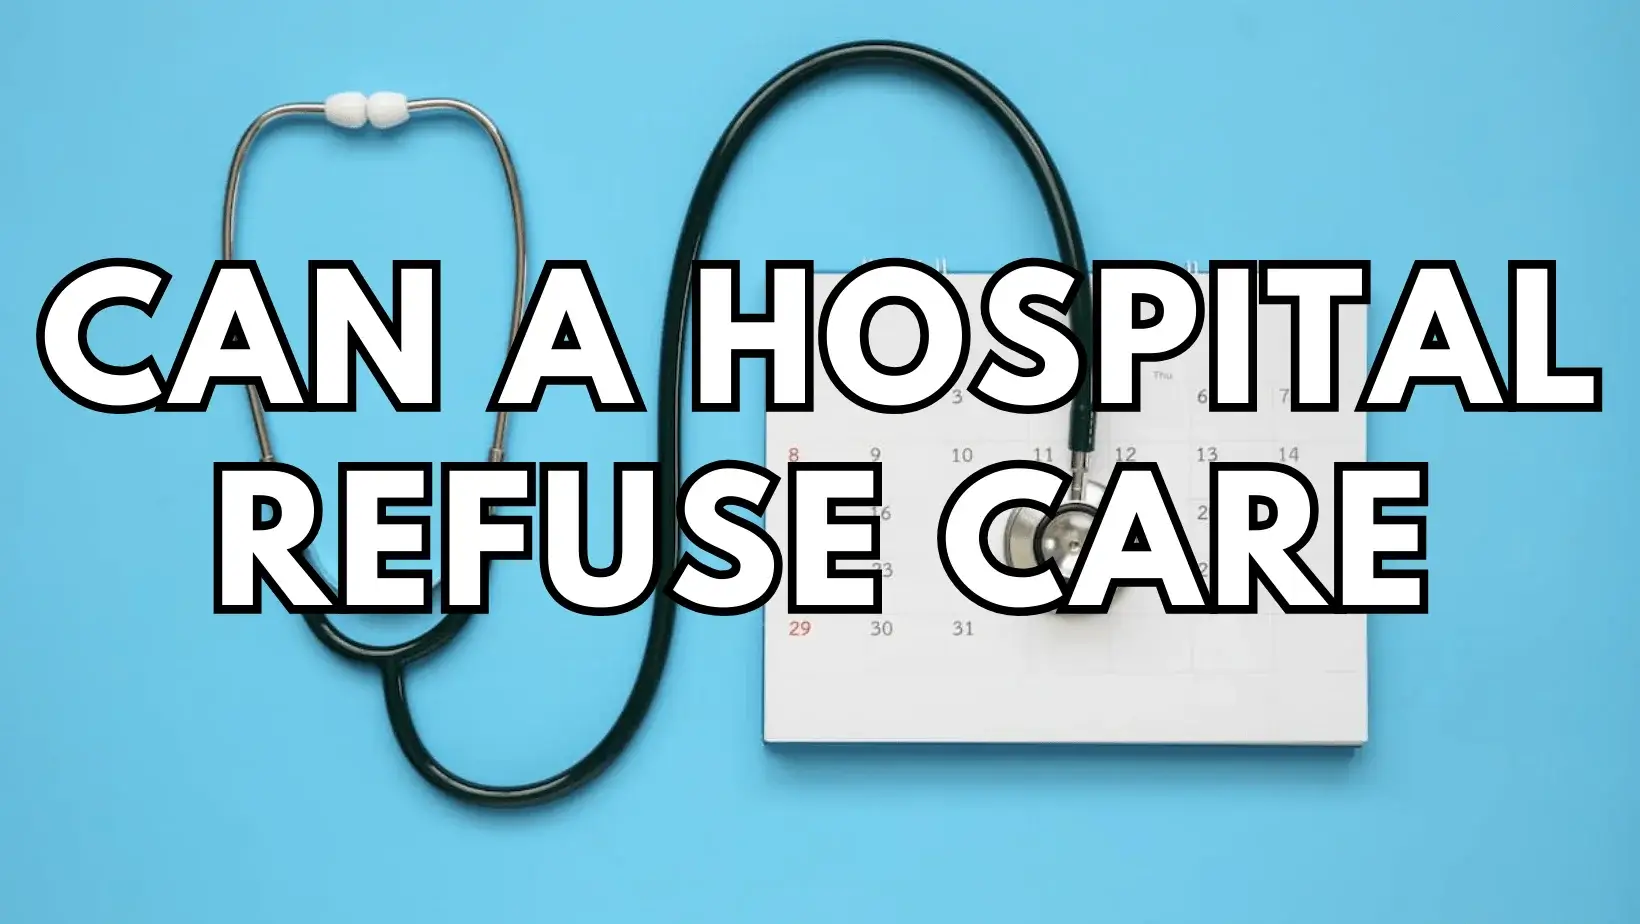 Can a Hospital Refuse Care